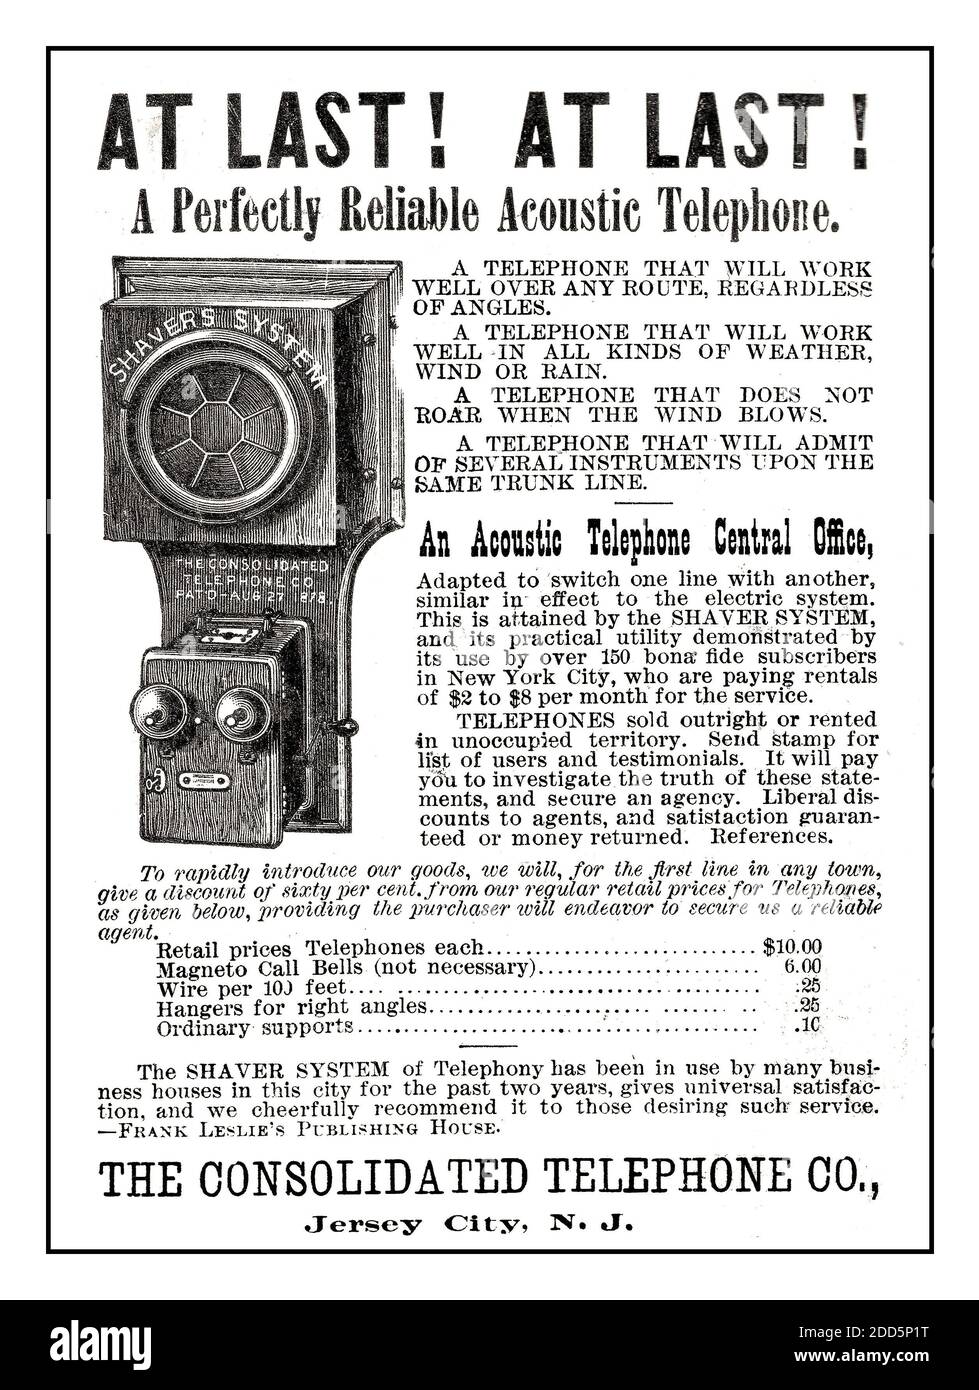 Historisches frühes akustisches Telefon 1800 Pressewerbung Consolidated Telephone Co. Ad 1886. ENDLICH! ENDLICH! Ein absolut zuverlässiges akustisches Telefon Stockfoto